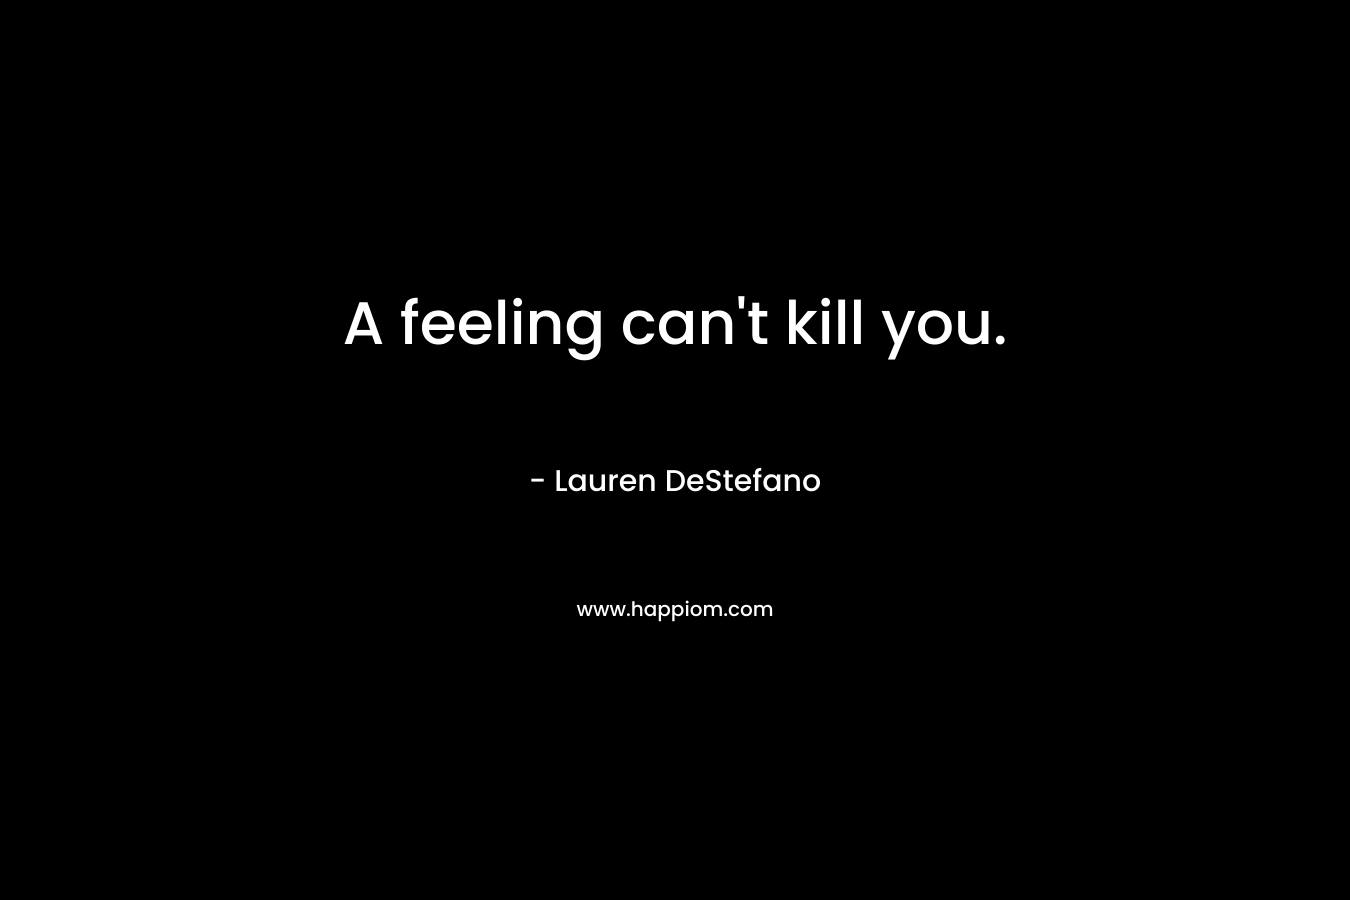 A feeling can't kill you.